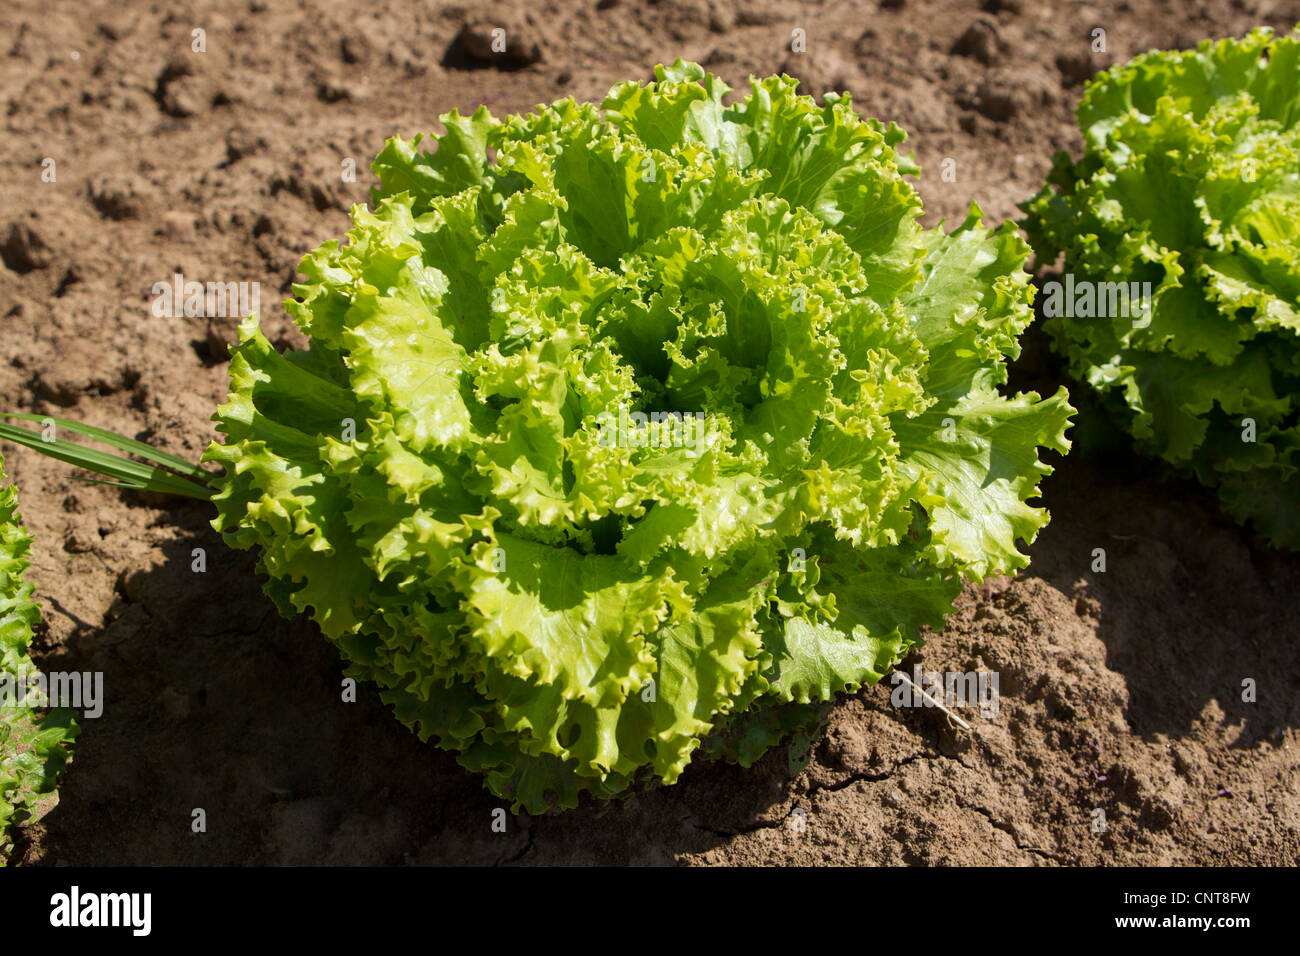 Salat batavia -Fotos und -Bildmaterial in hoher Auflösung – Alamy